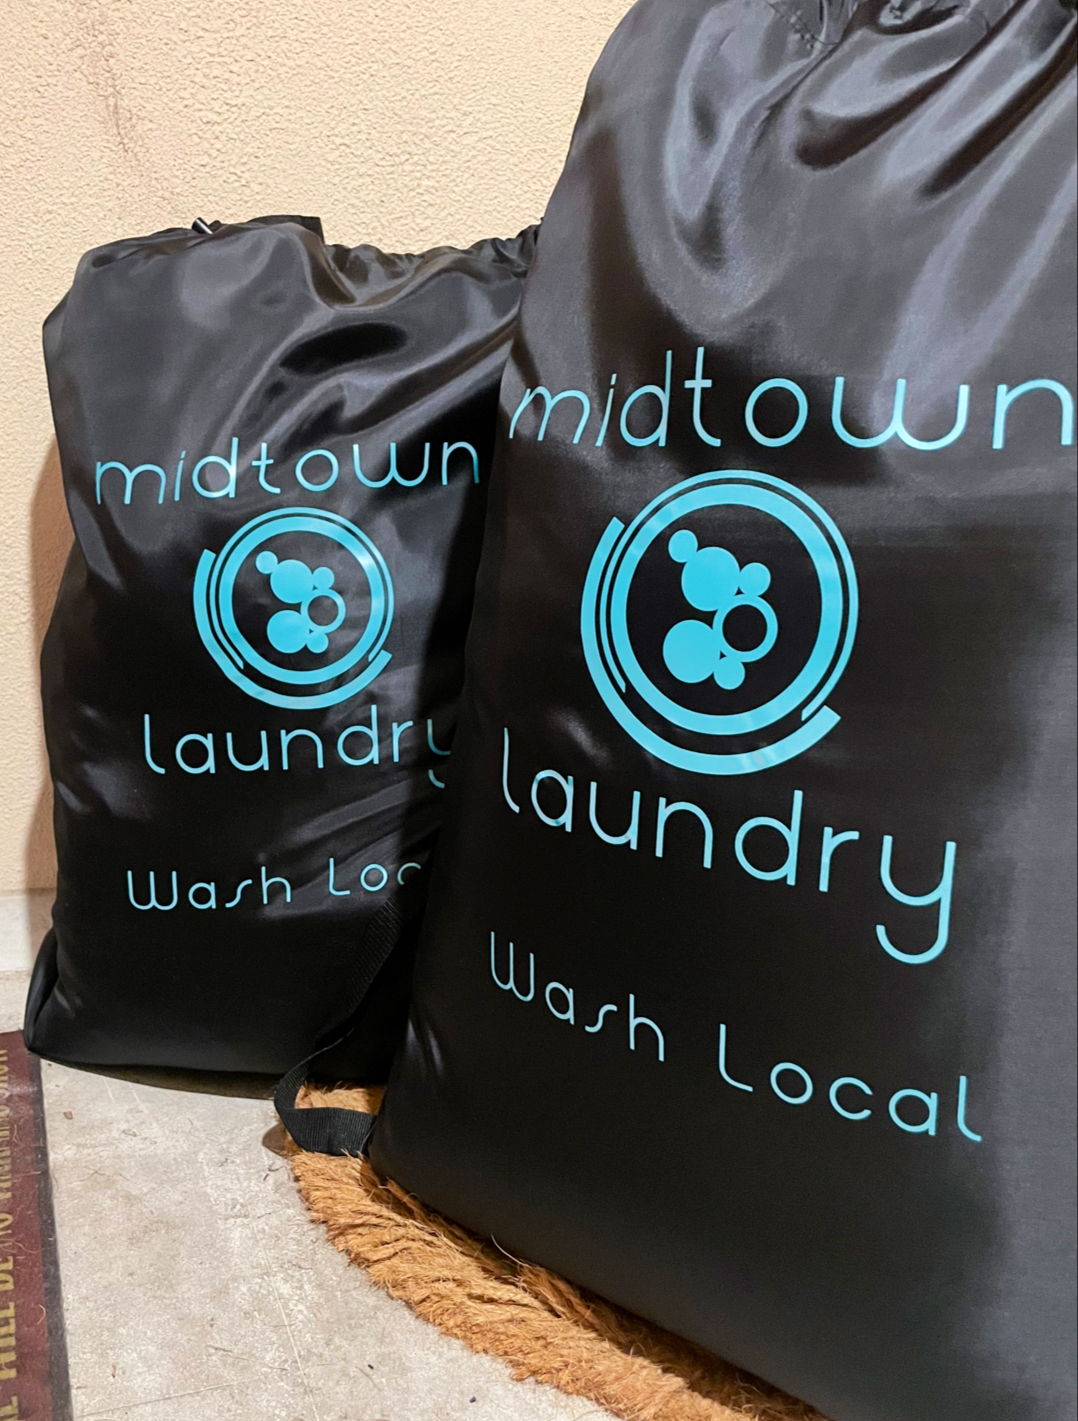 Midtown Laundry/Laundry Valet